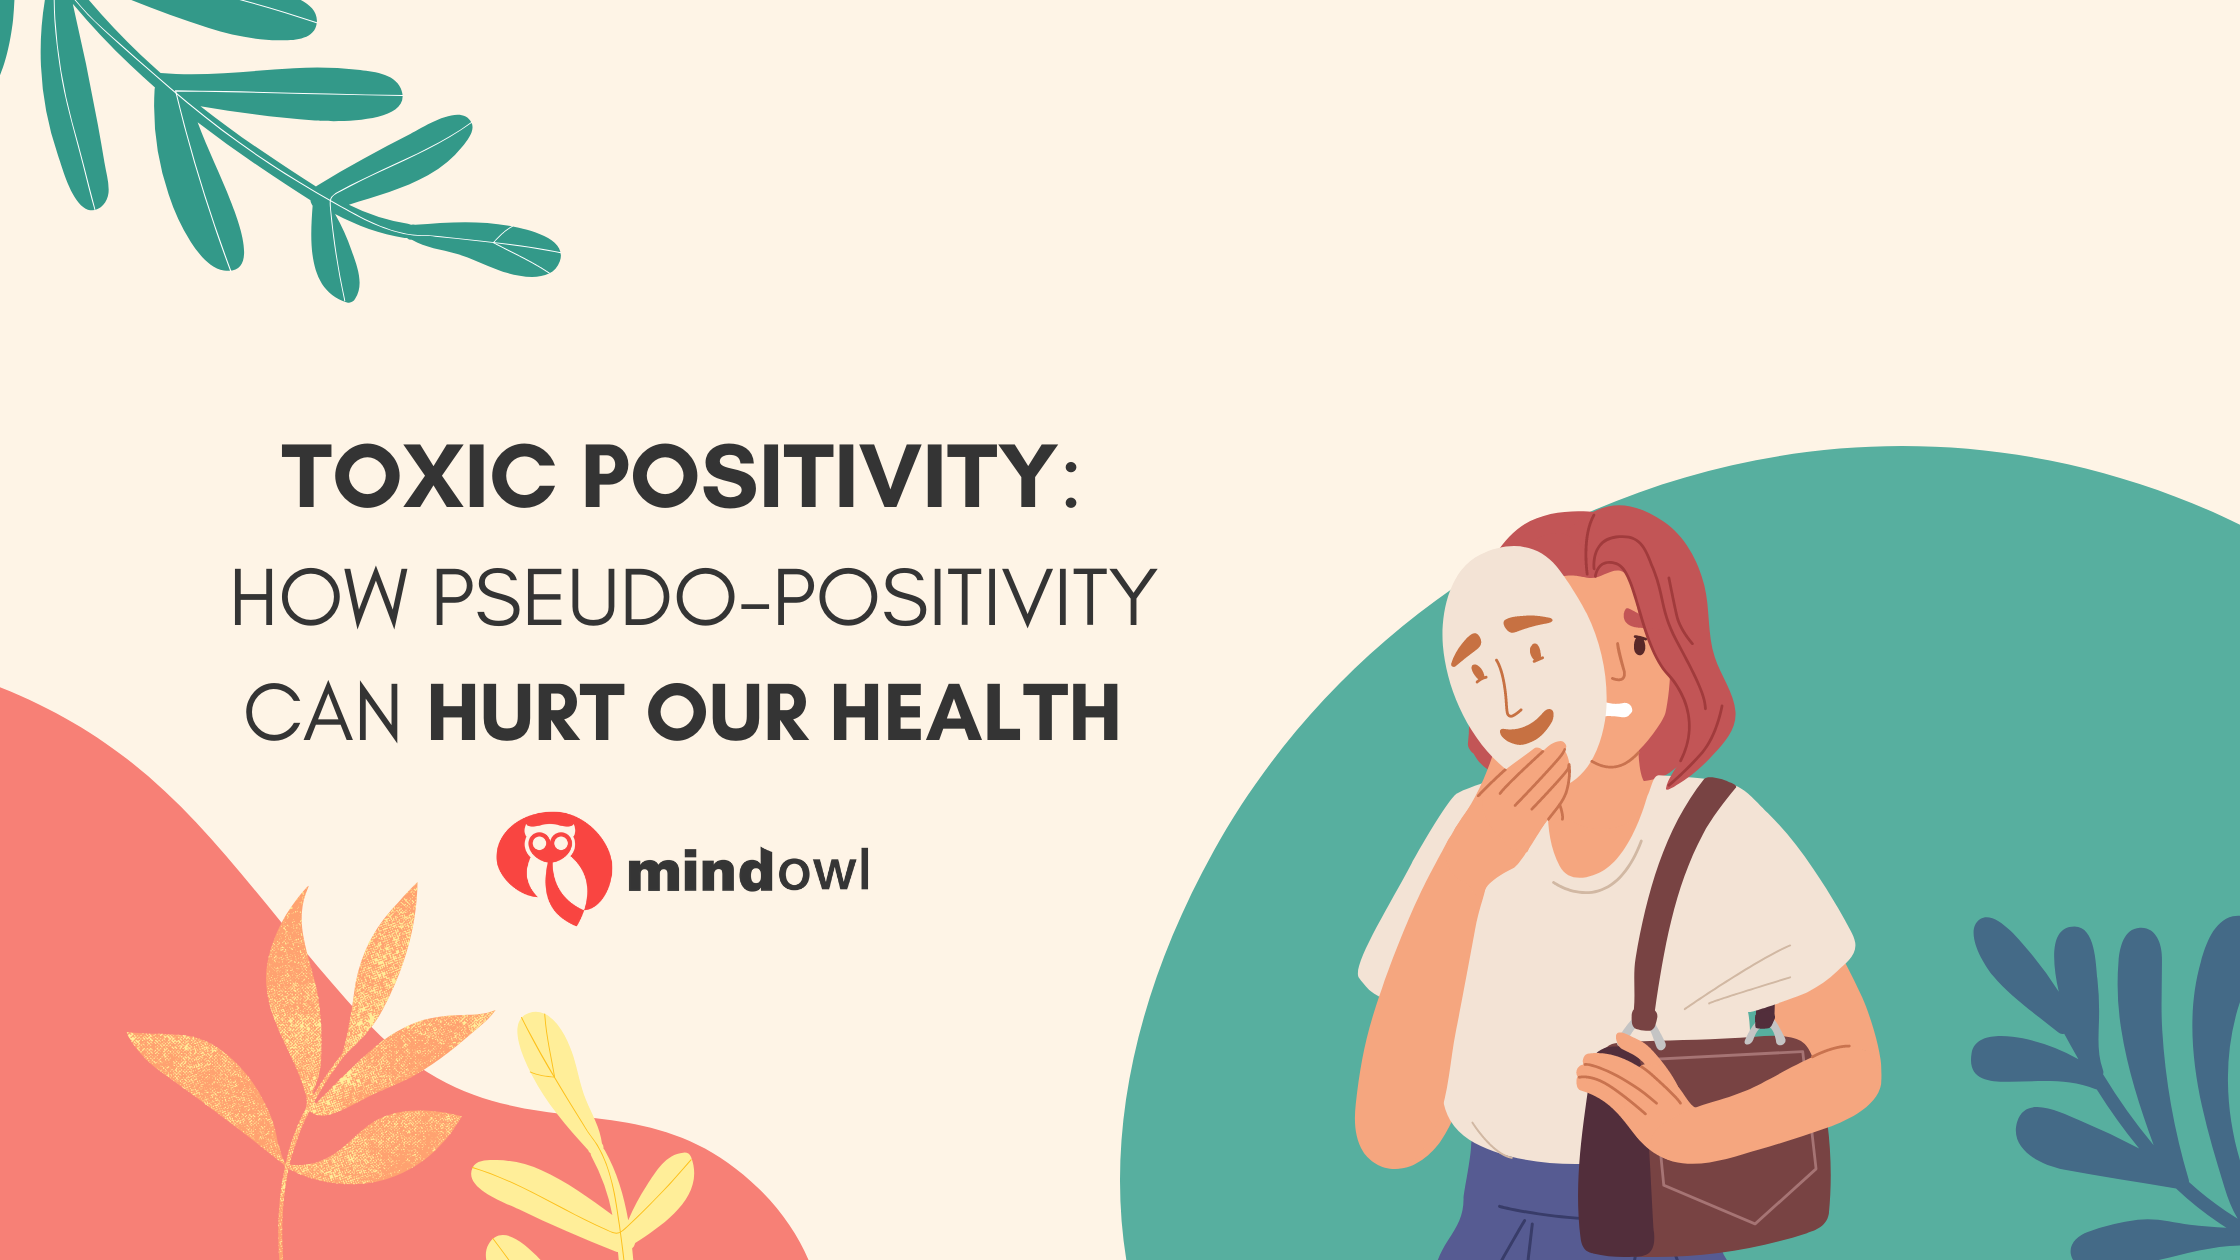 Toxic positivity: How pseudo-positivity can hurt our health